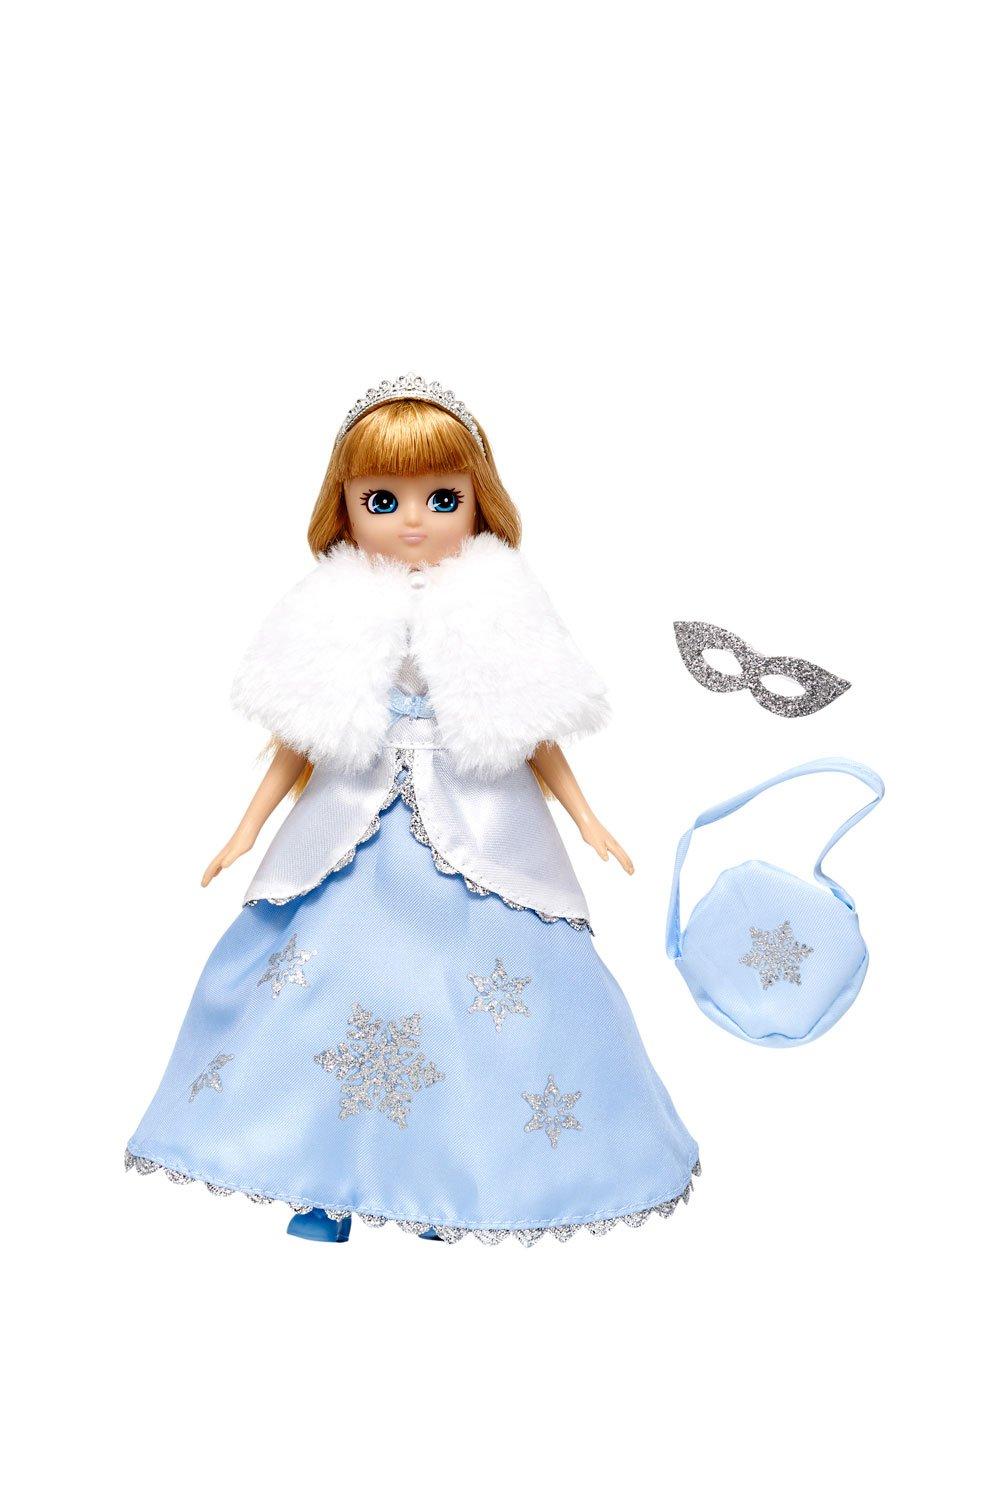 Lottie Dolls Snow Queen Doll